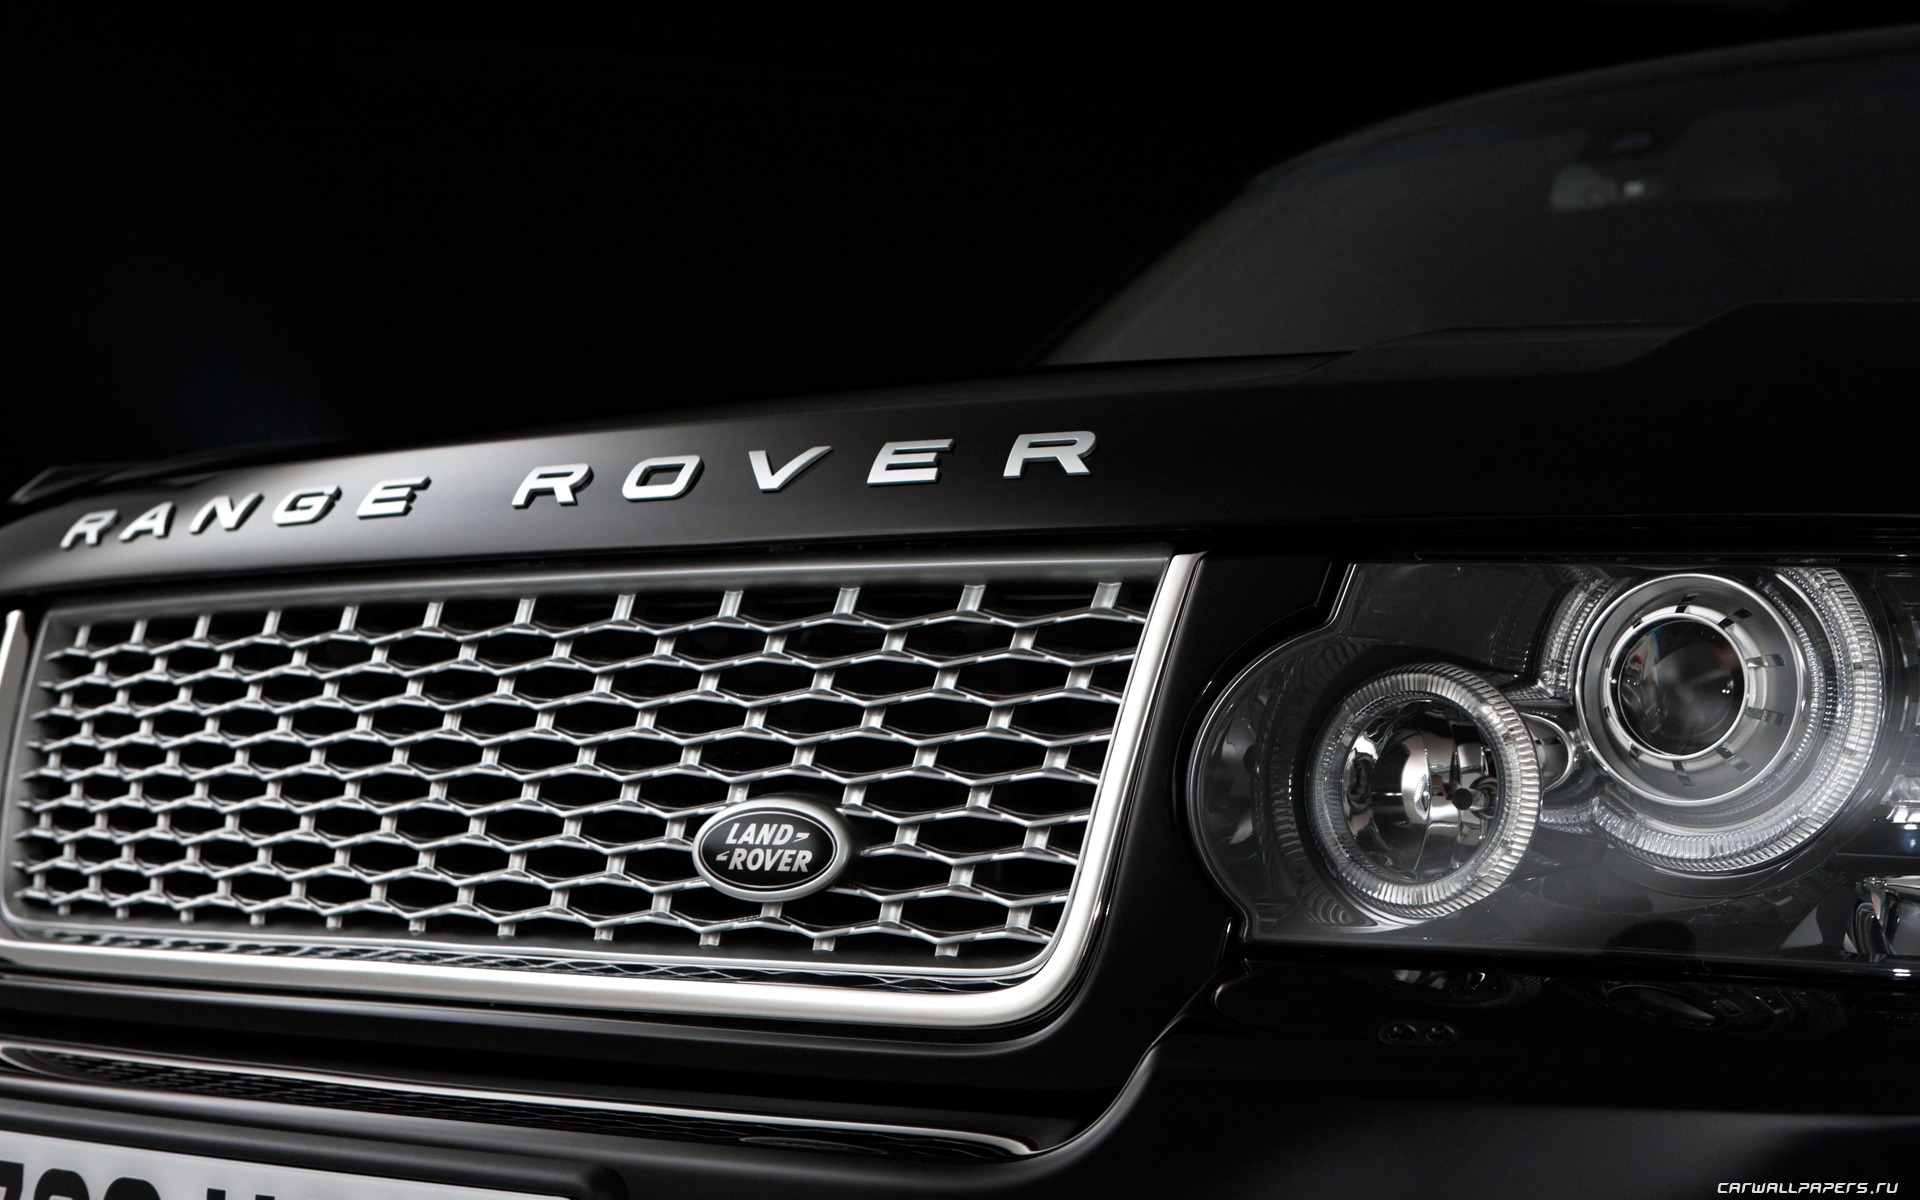 Land Rover Range Rover Black Edition - 2011 路虎21 - 1920x1200